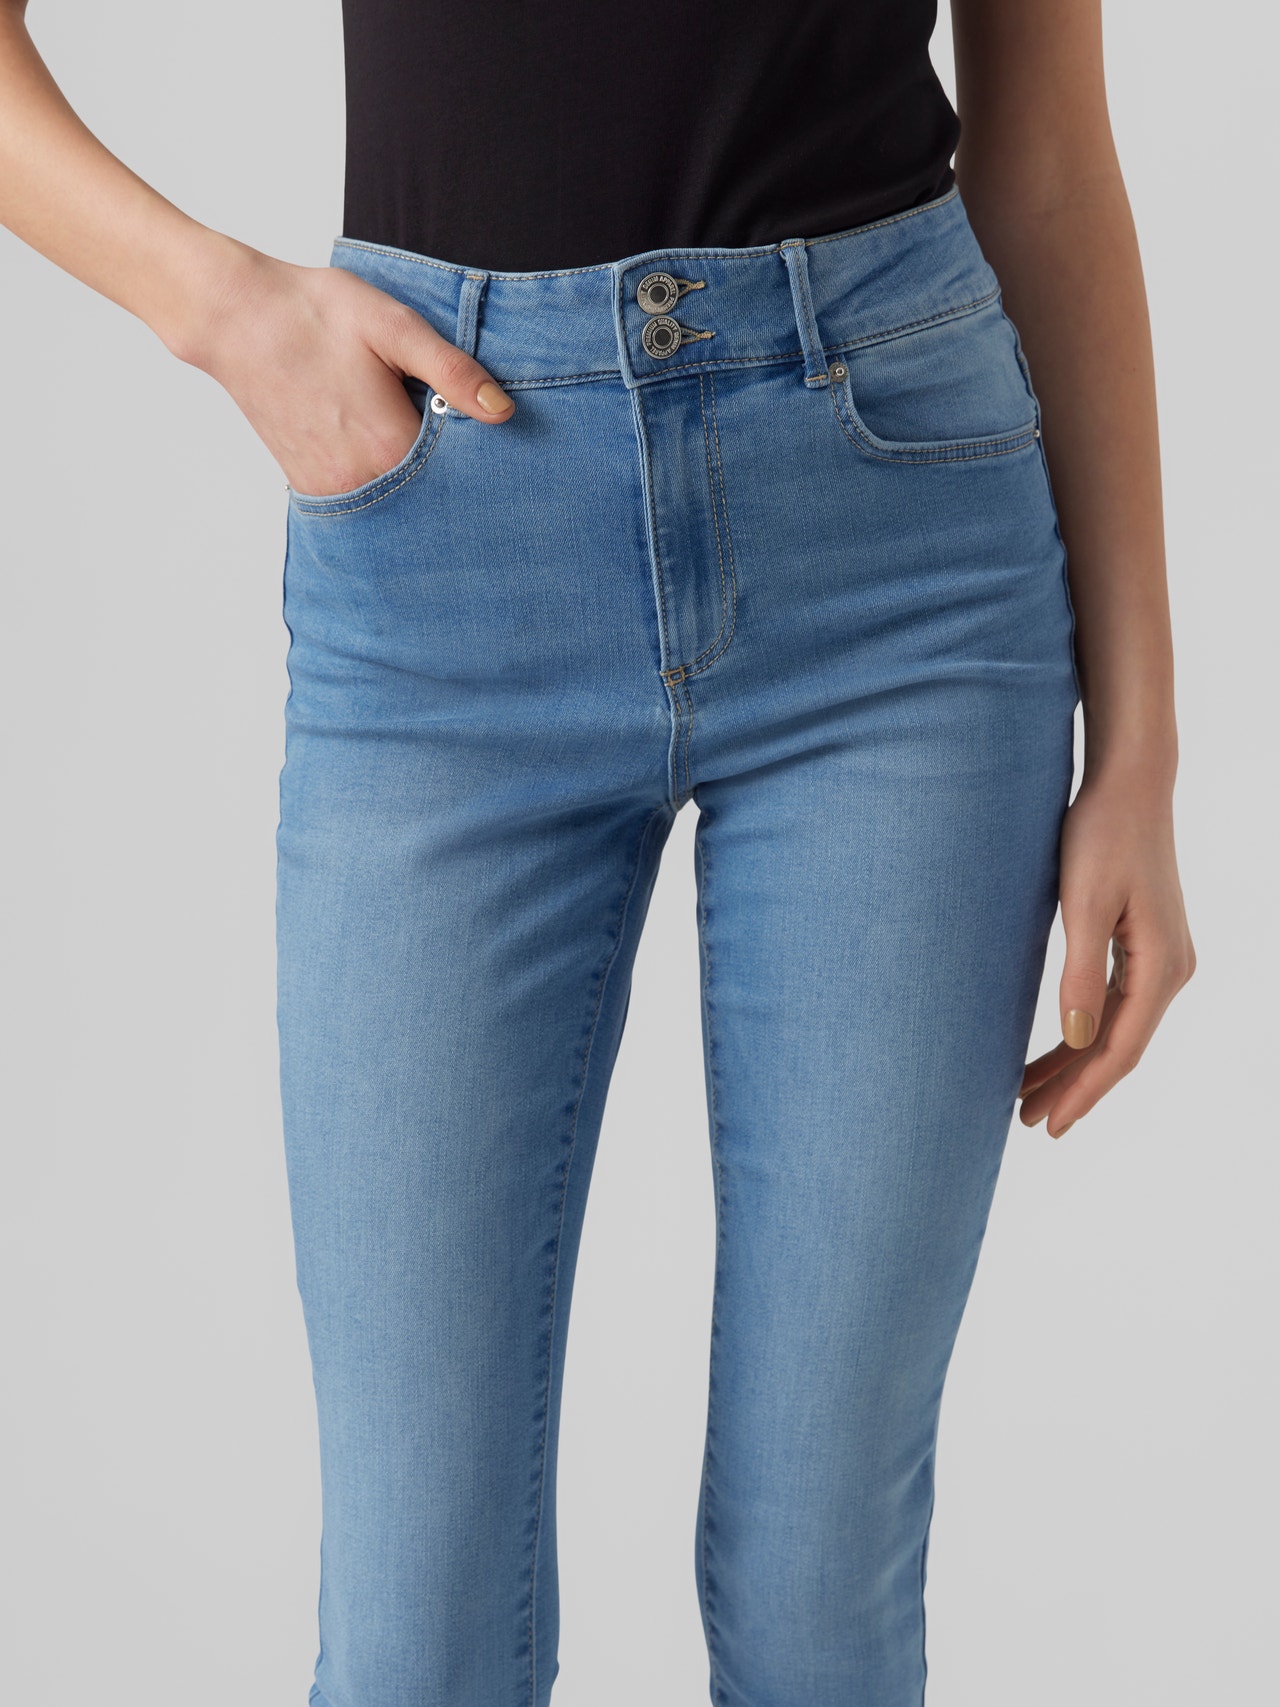 VMSOPHIA Medium | Moda® rise Blue Jeans High | Vero